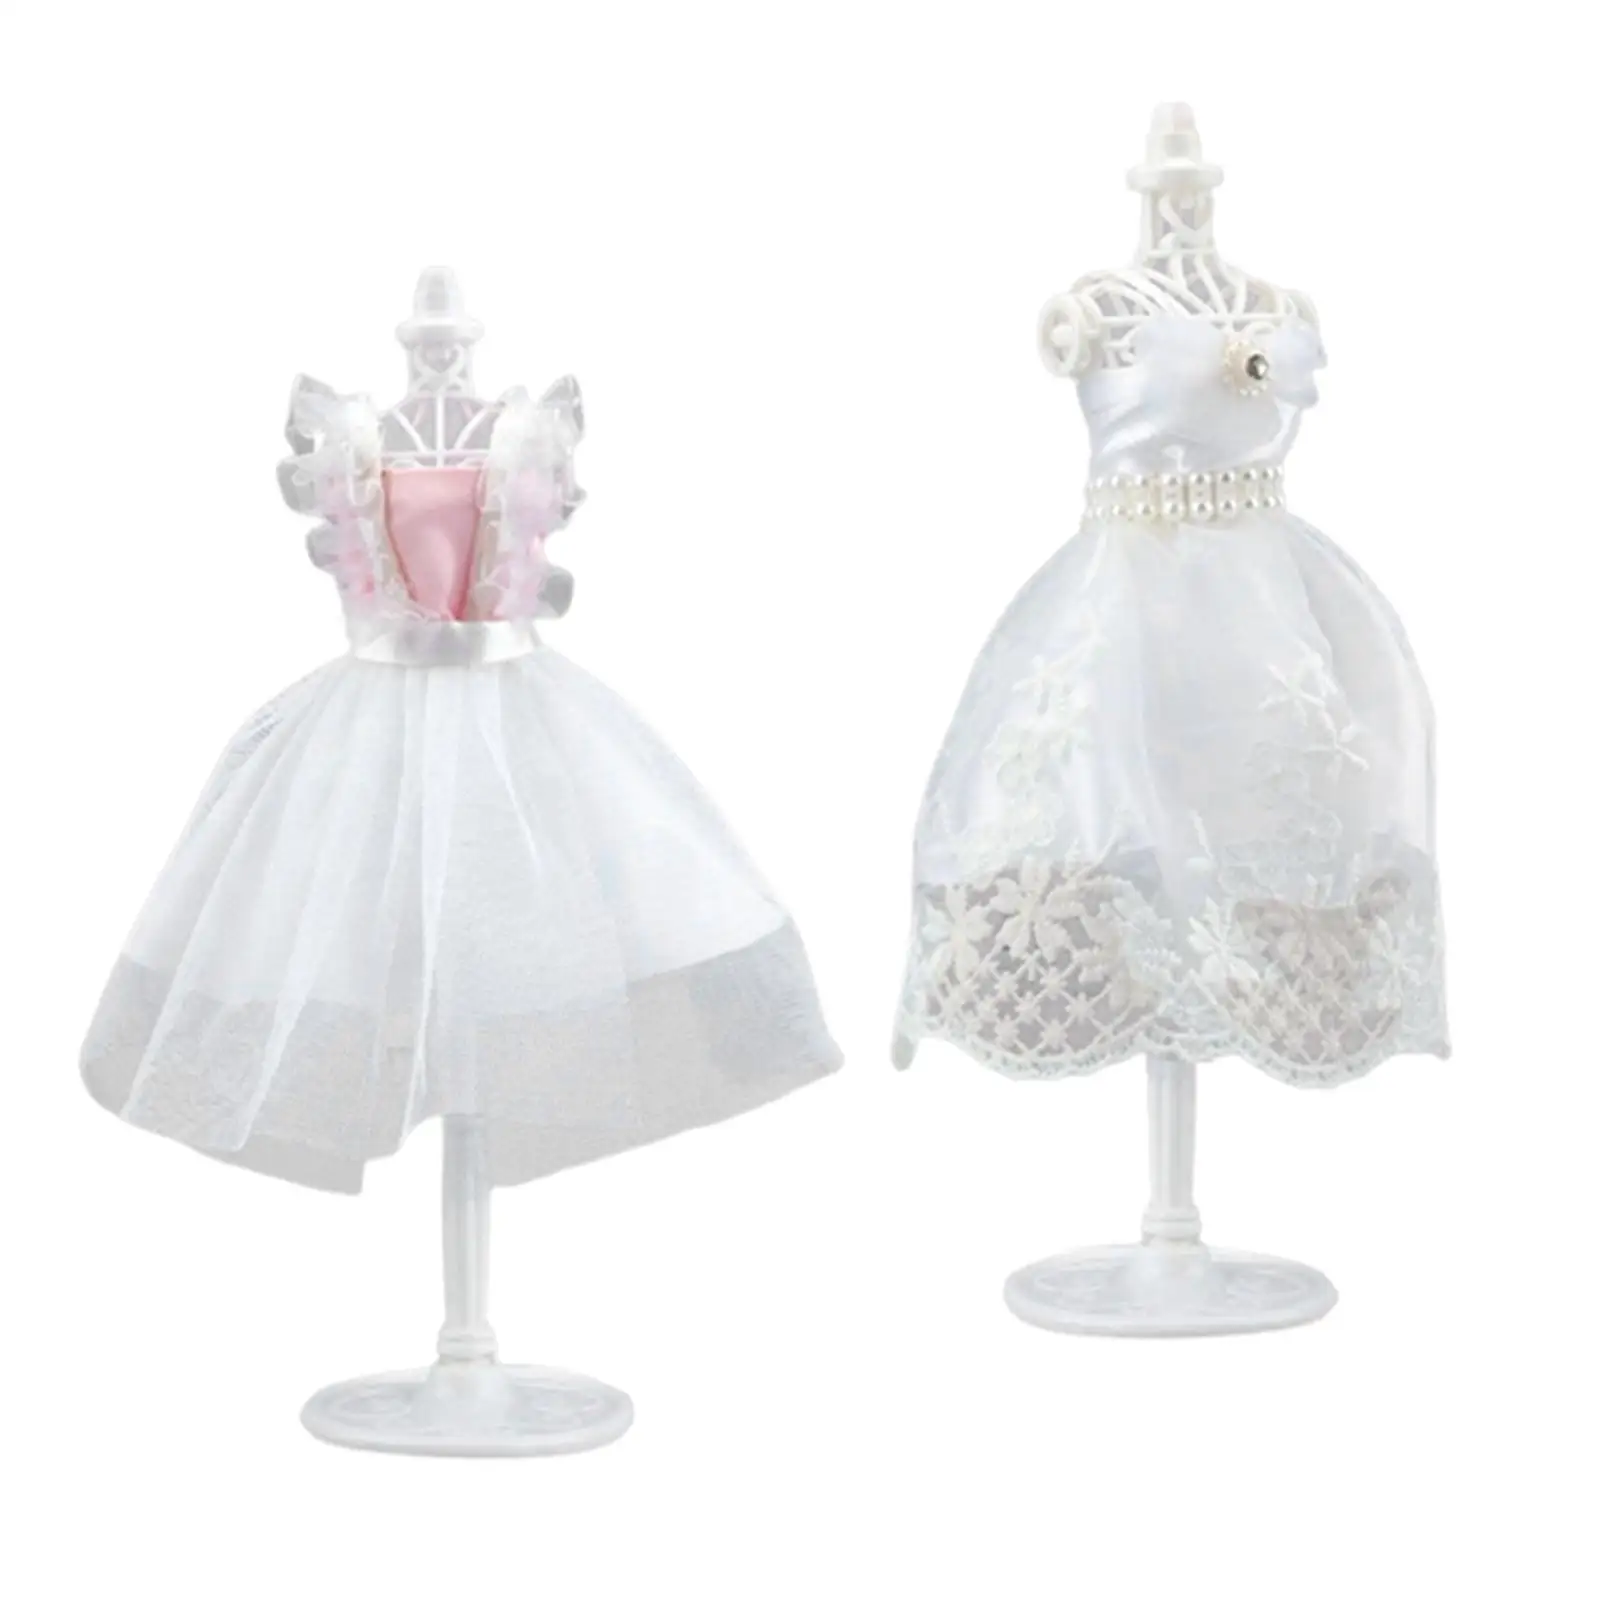 Fashion Design Kit Doll Dress Making Set dress up Creativity Crafts Kit Doll Clothing design for Party Girls Beginner